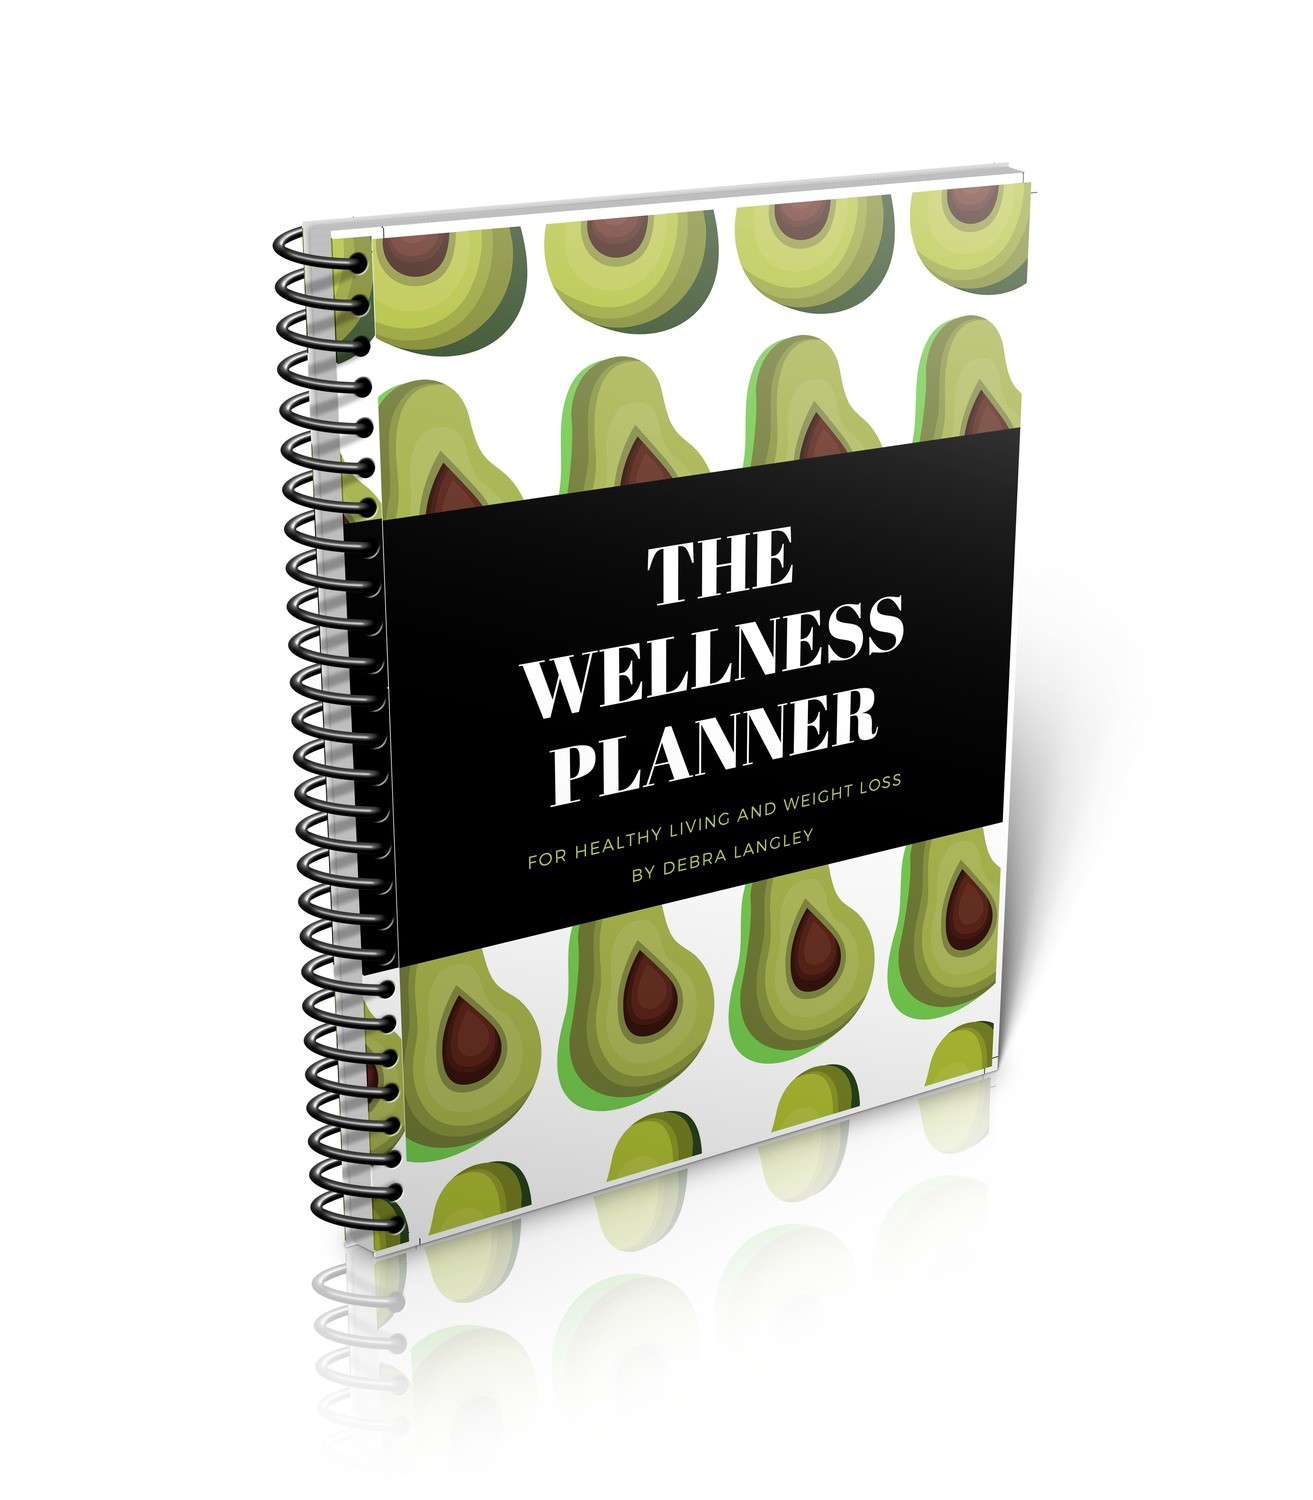 The Wellness Planner A4 Hard Copy